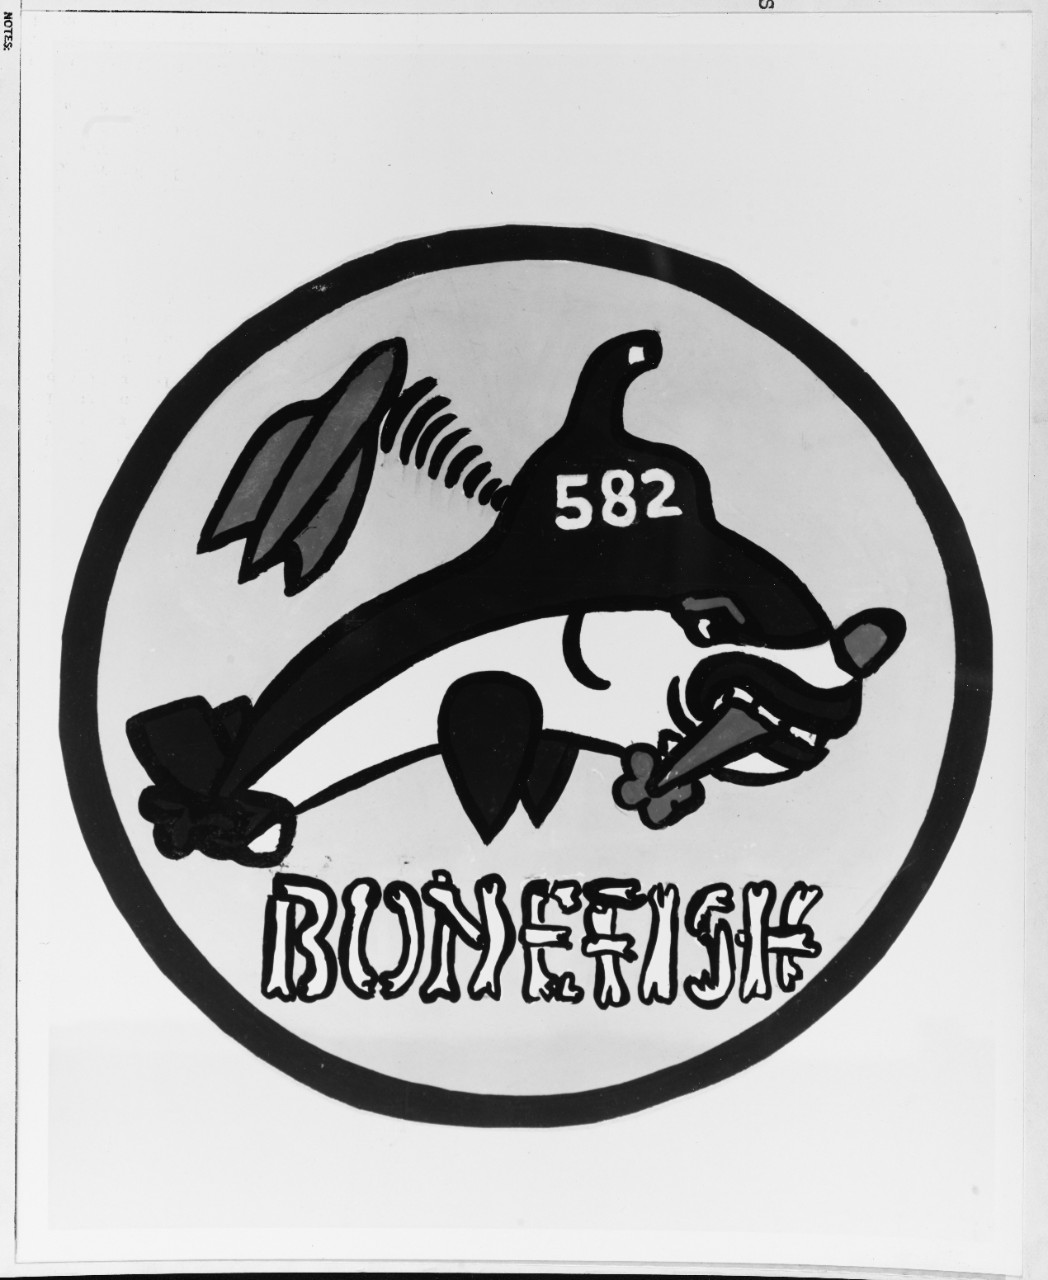 Insignia: USS BONEFISH (SS-582)